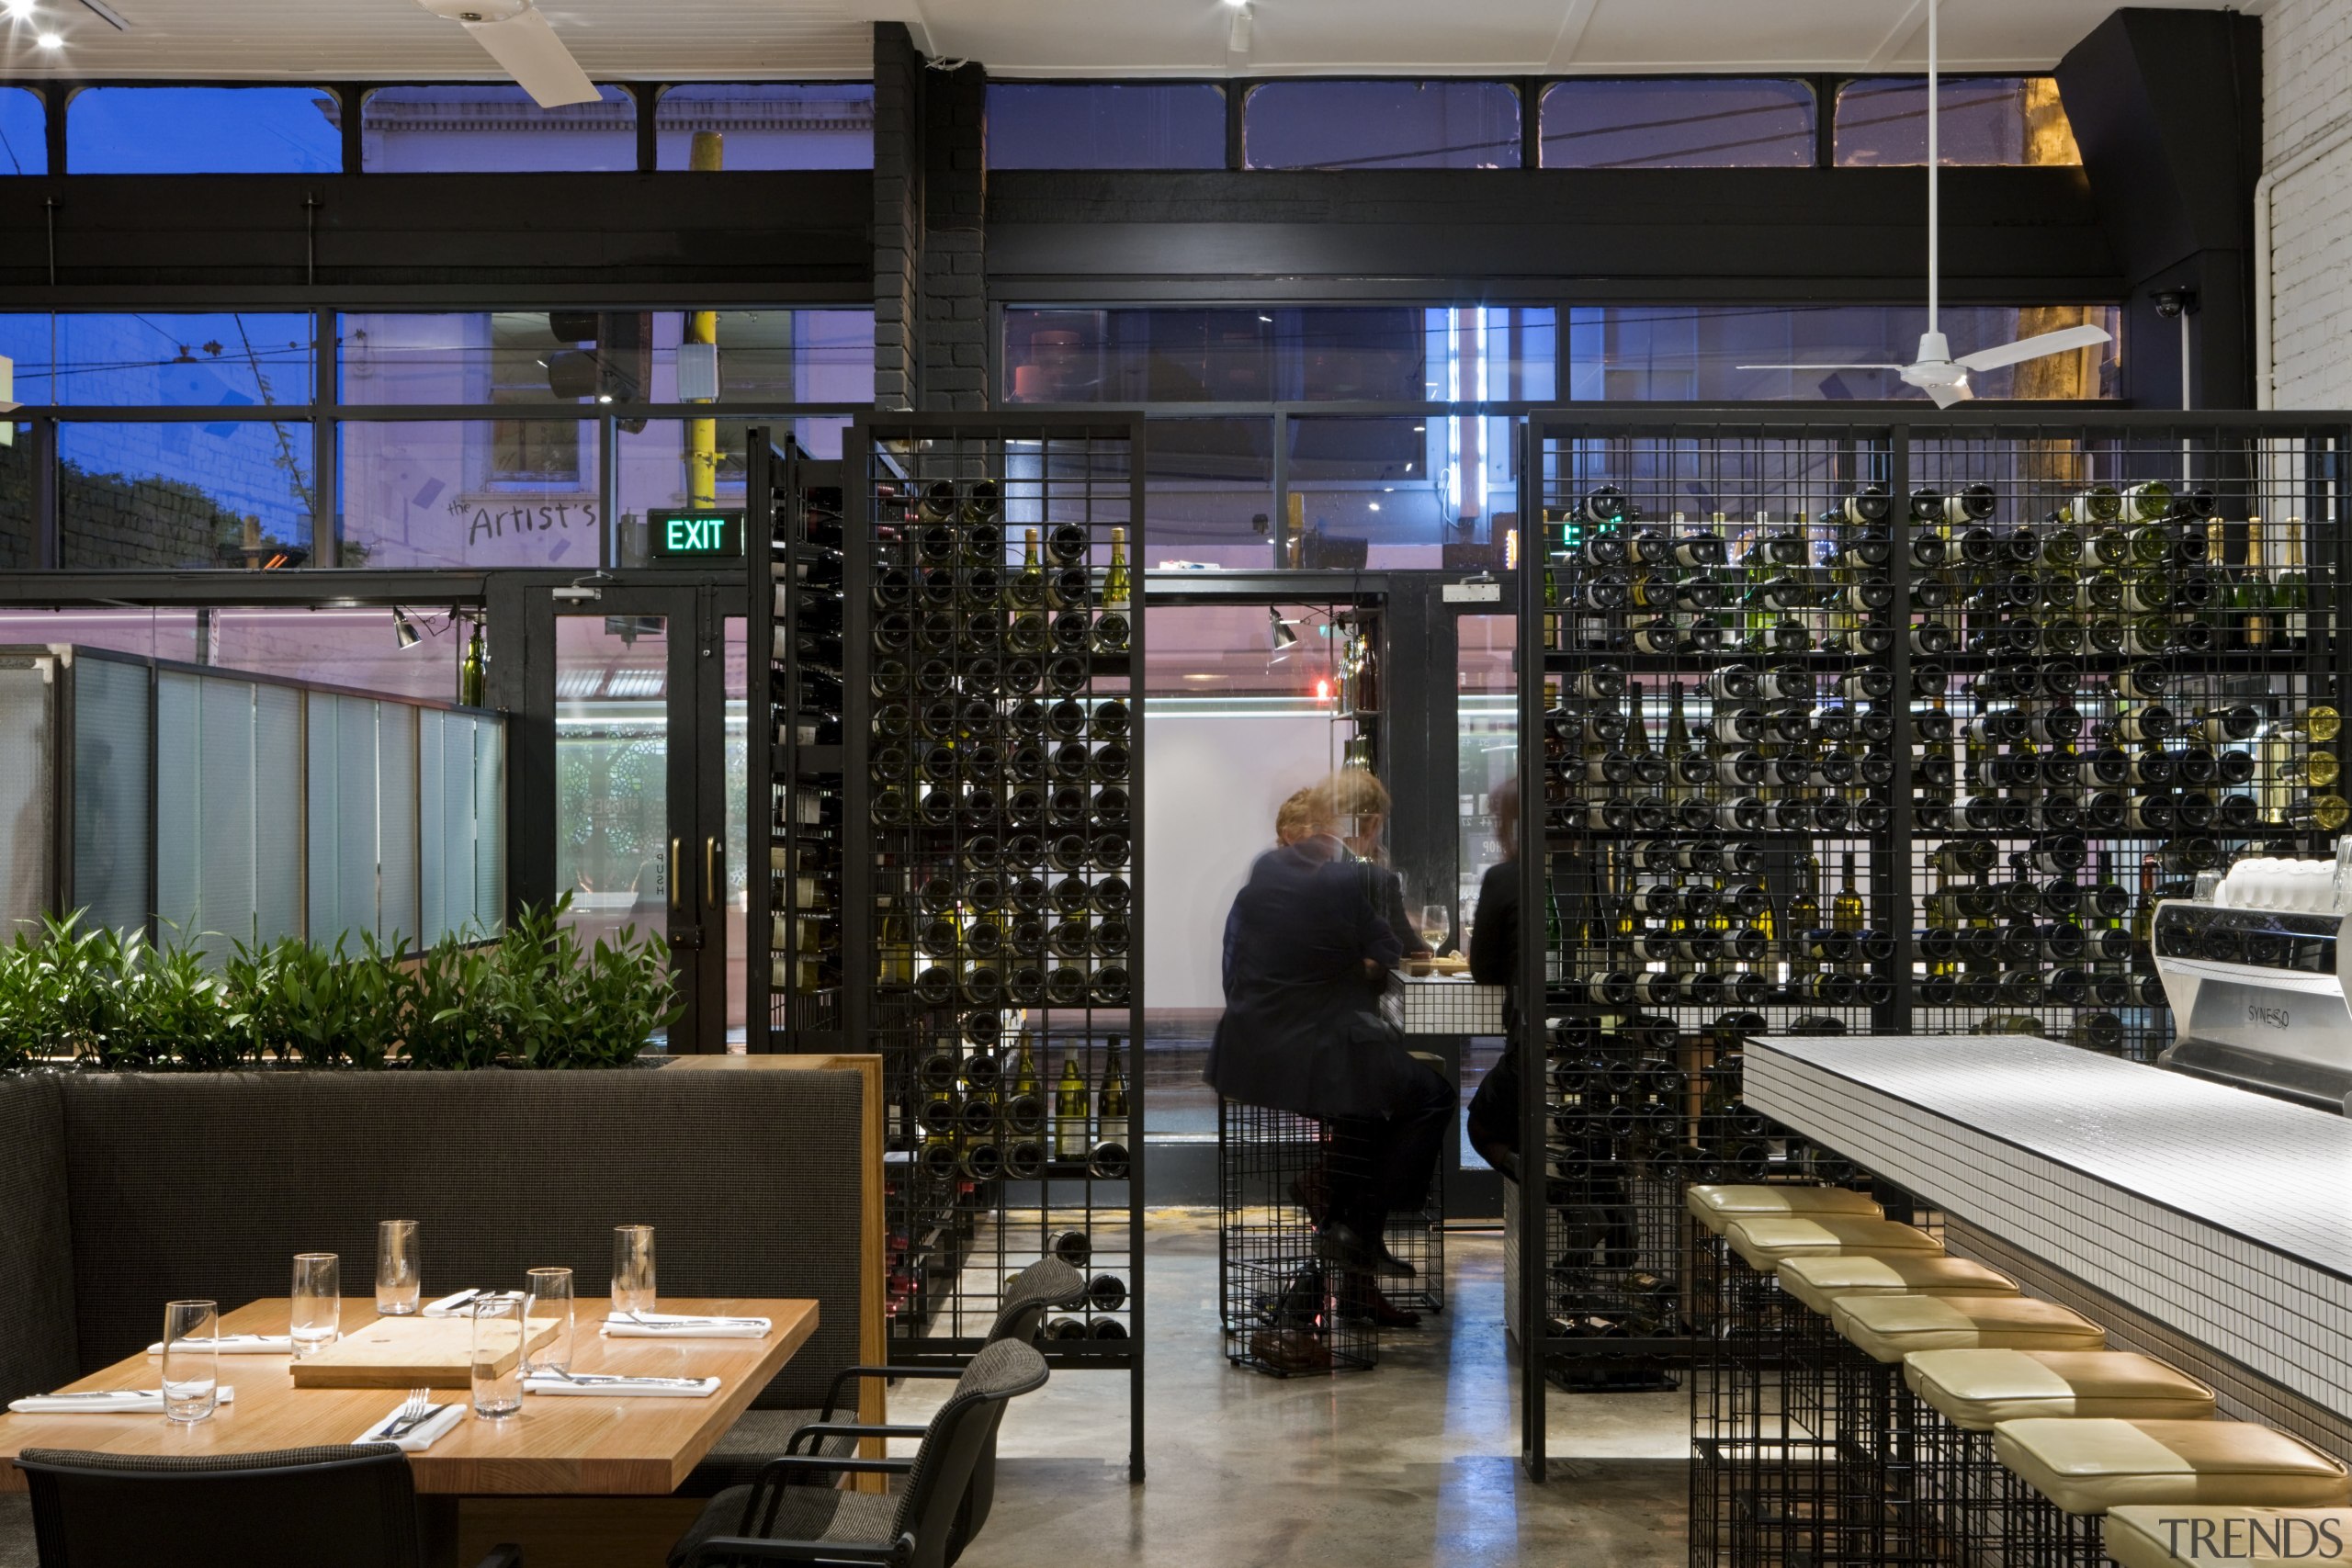 View of the St Judes Cellar bar and interior design, restaurant, black